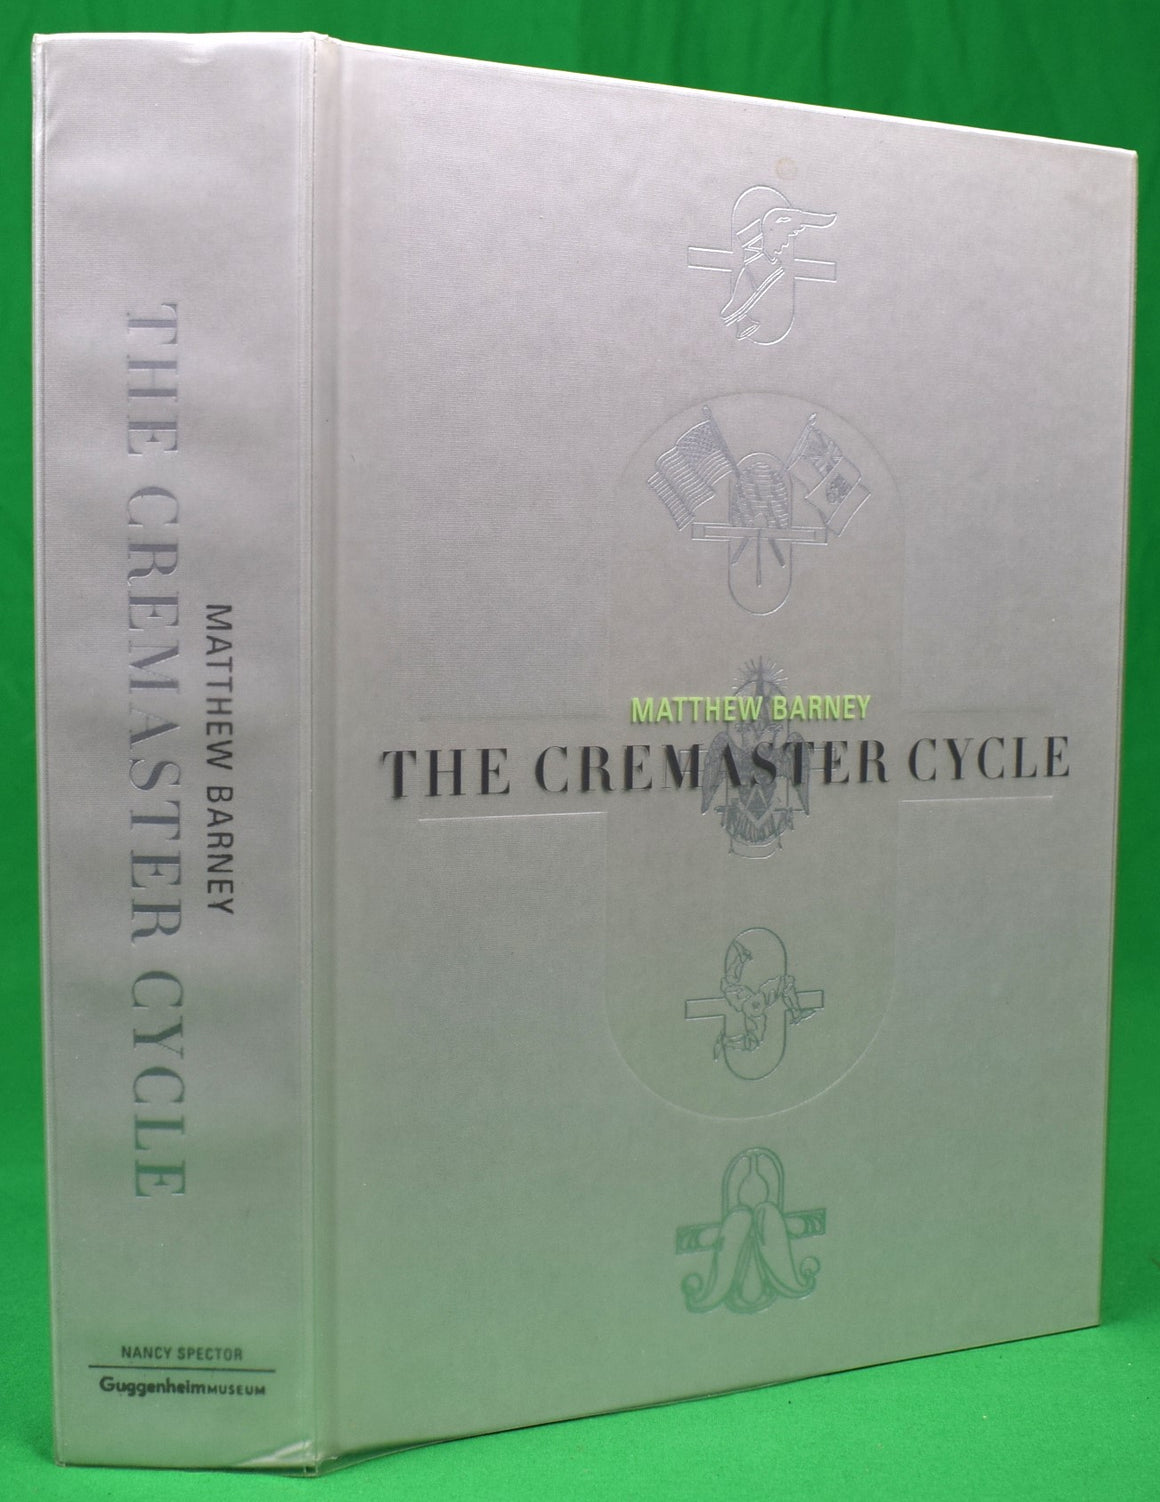 "Matthew Barney: The Cremaster Cycle" 2002 SPECTOR, Nancy